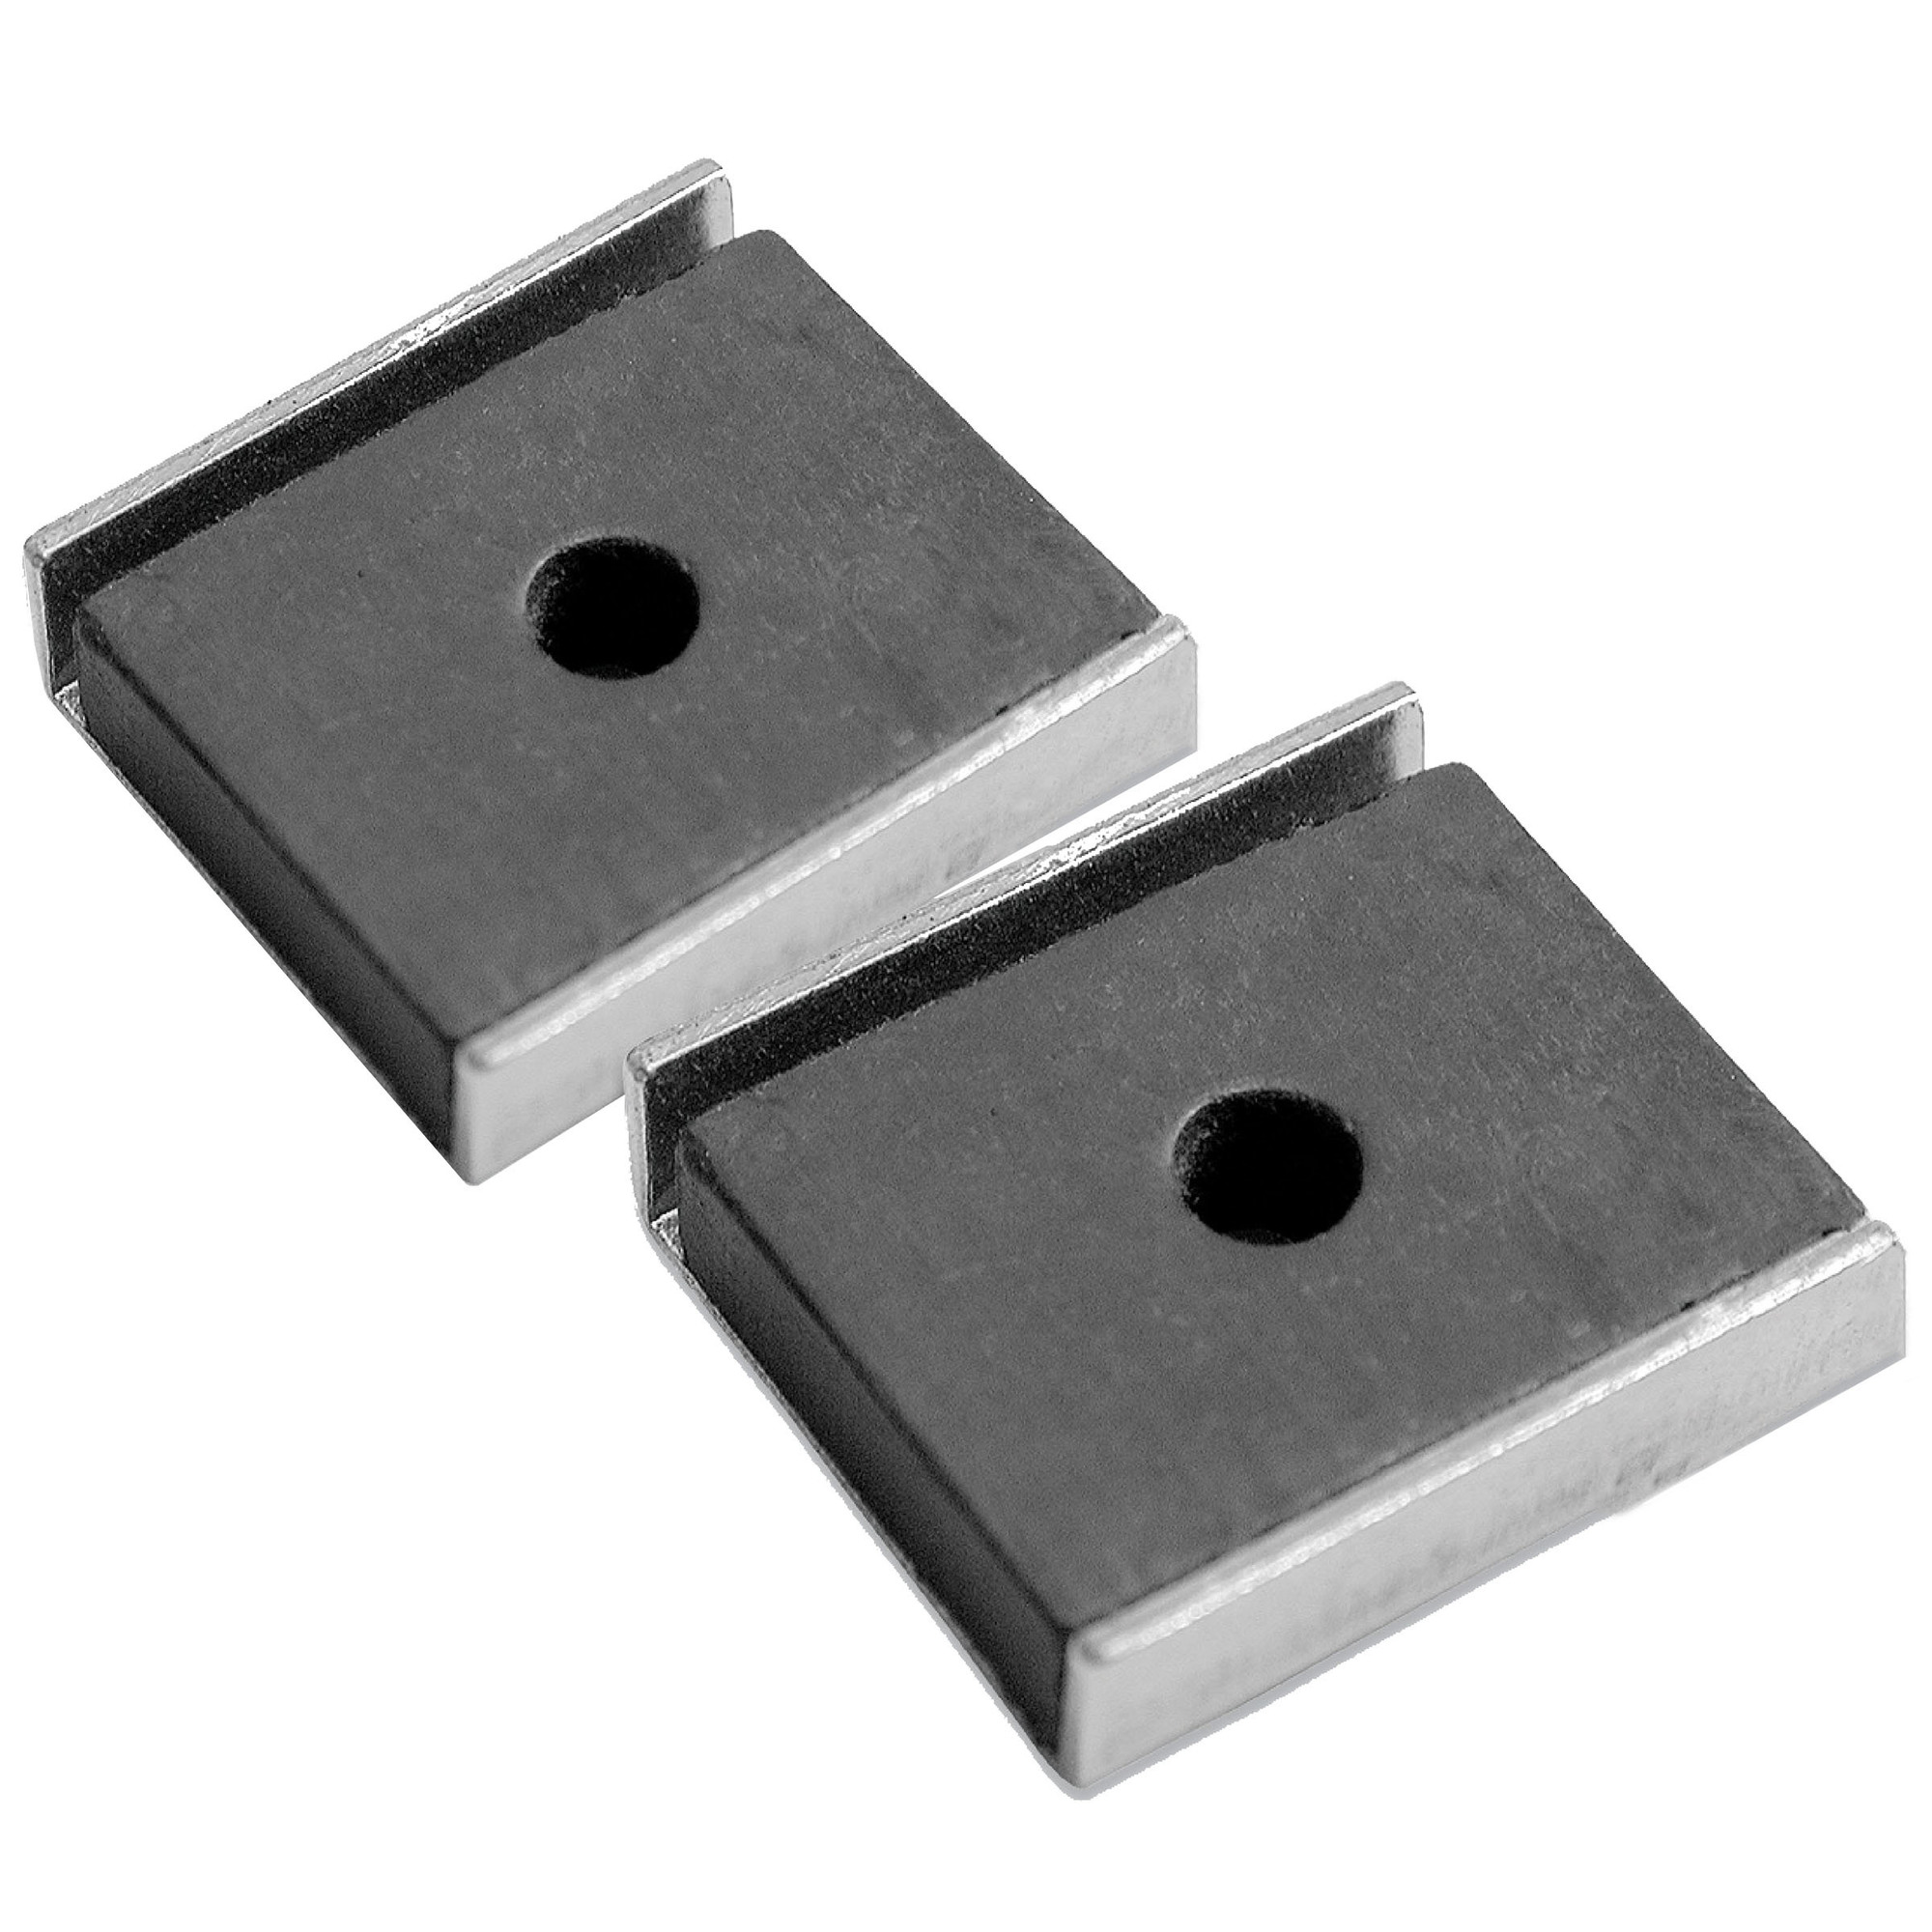 Ceramic Latch Magnet Channel Assemblies (2pk)